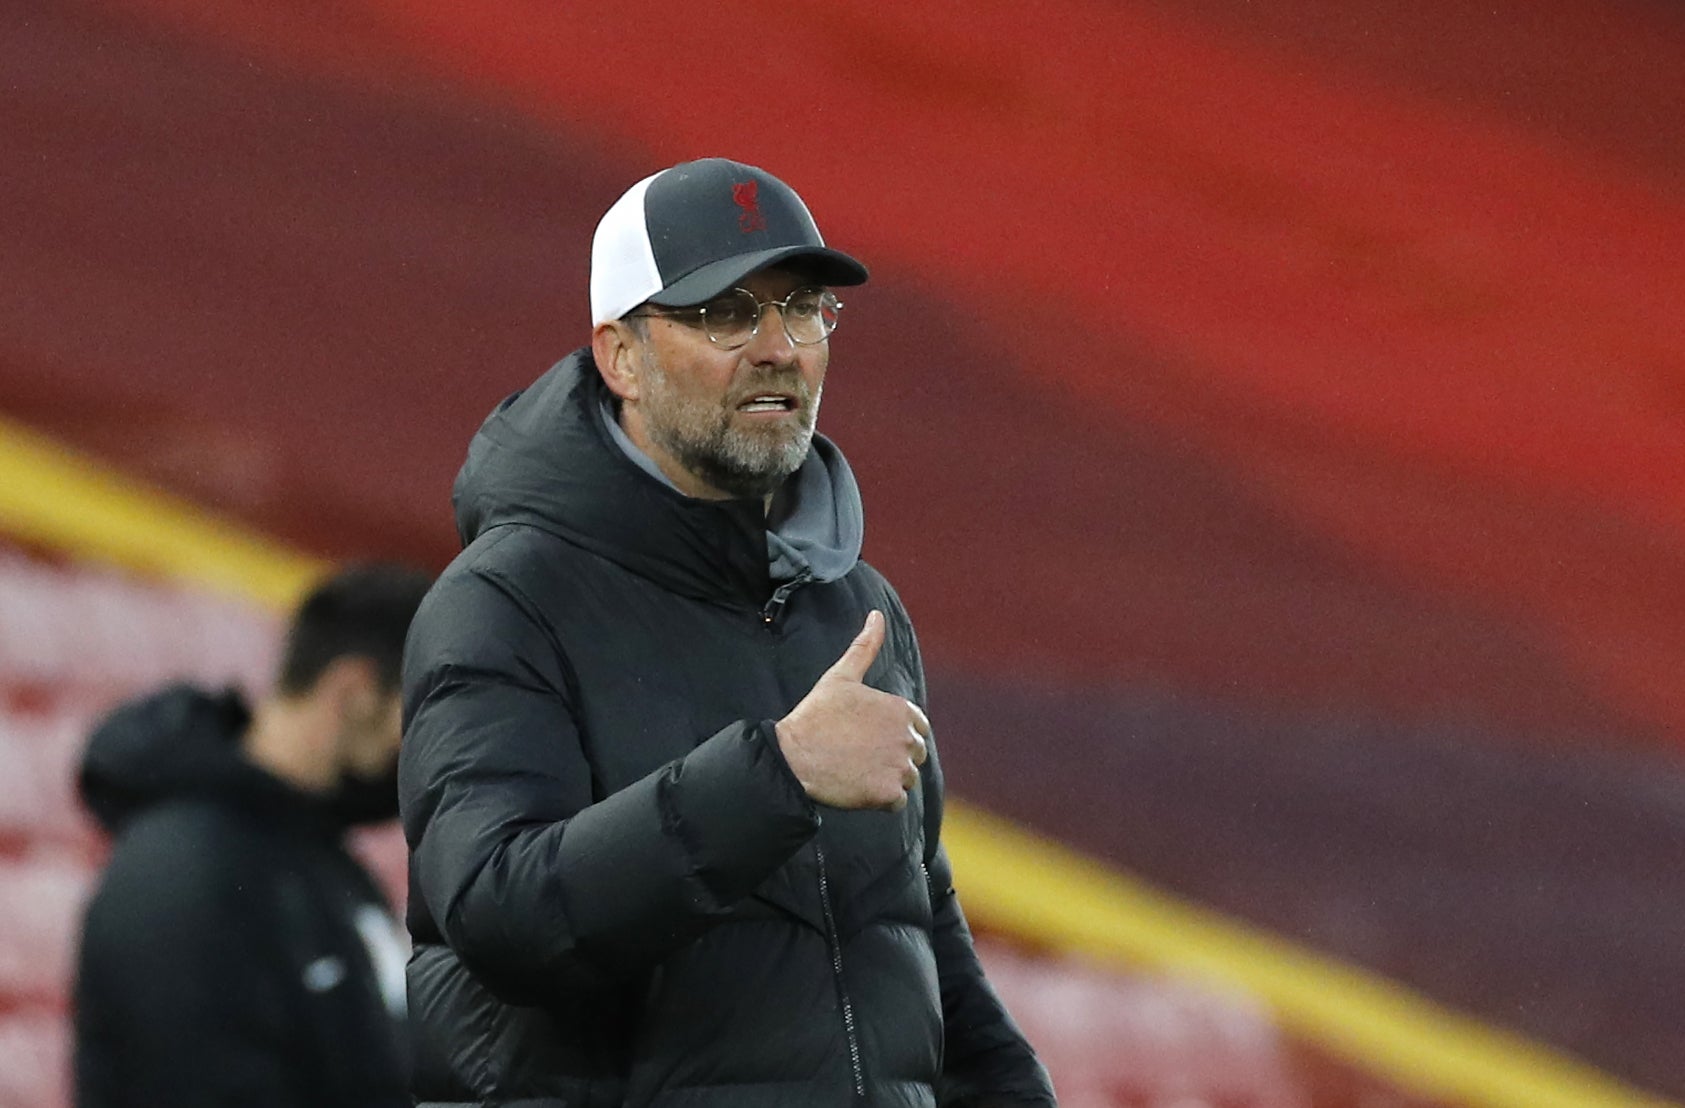 Liverpool manager Jurgen Klopp gives a thumbs up gesture